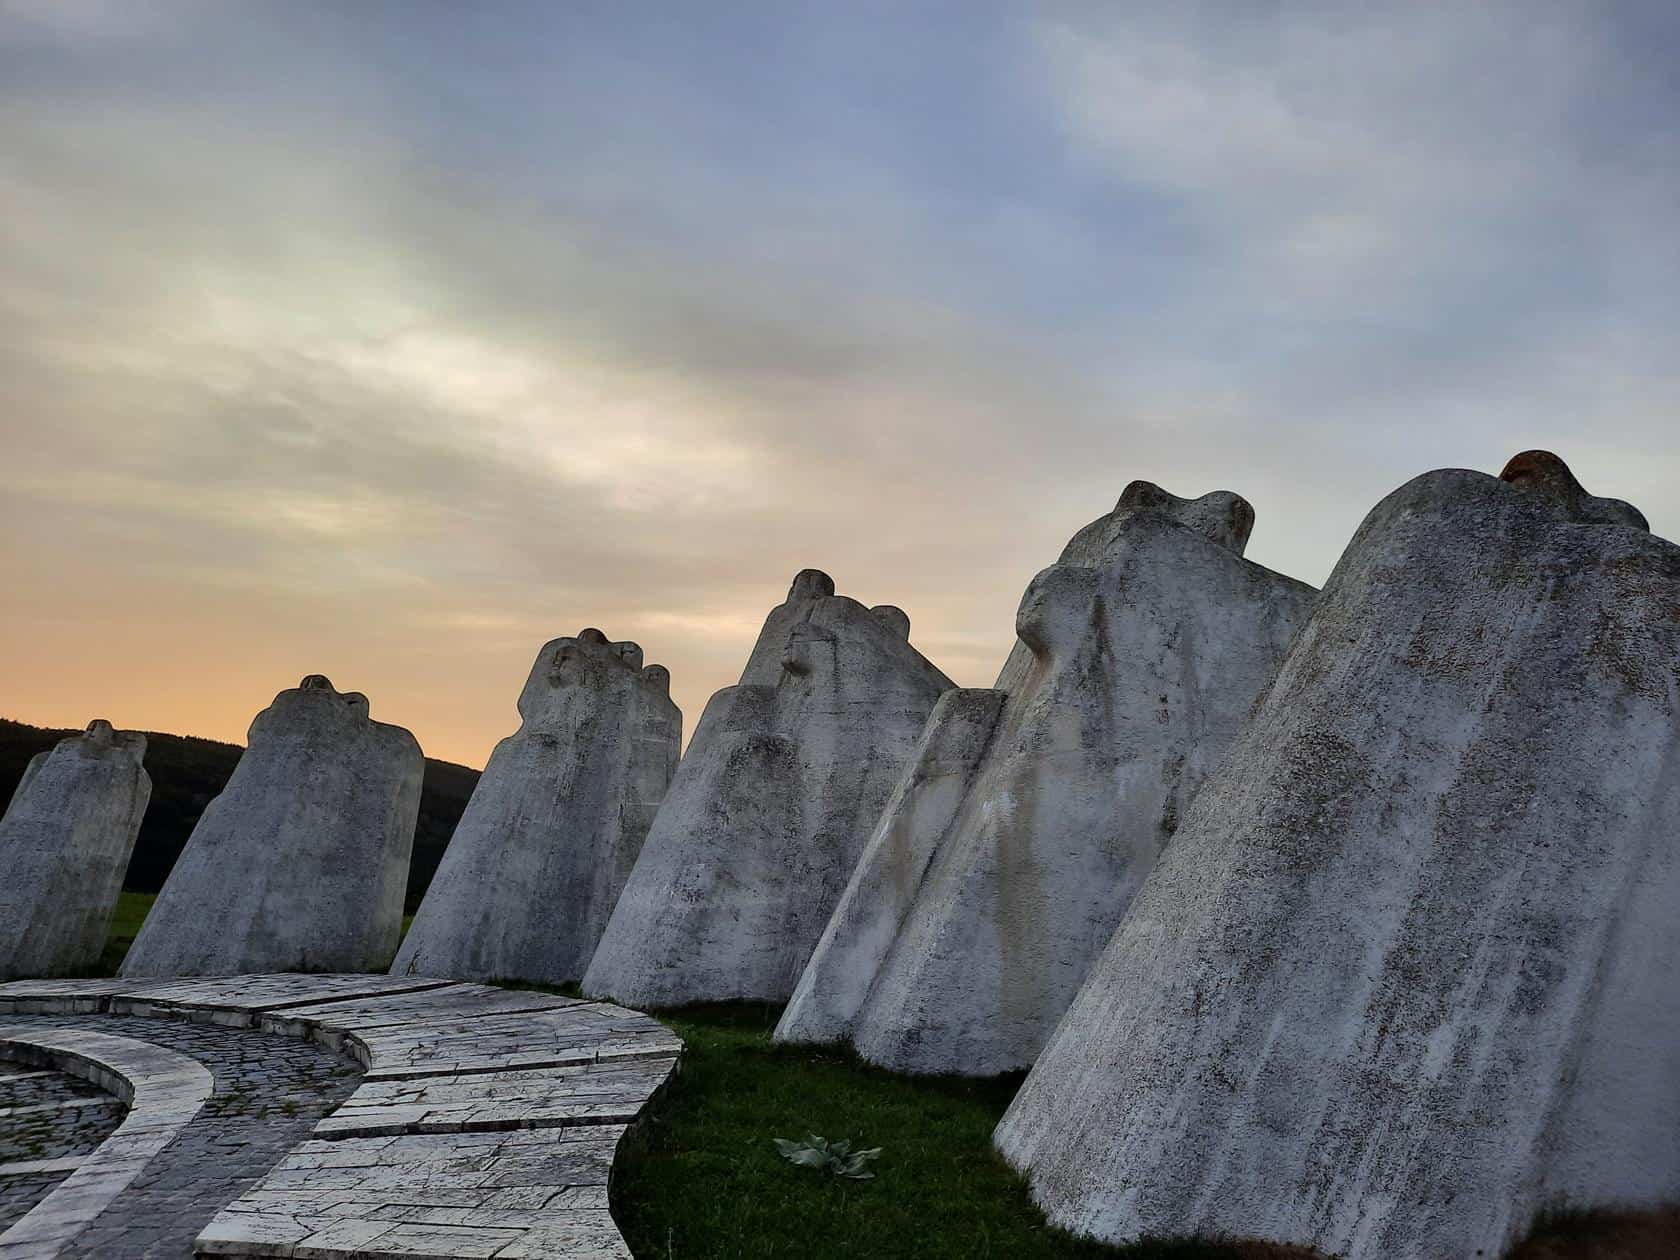 kadinjaca memorial park serbia sunset slanted slabs